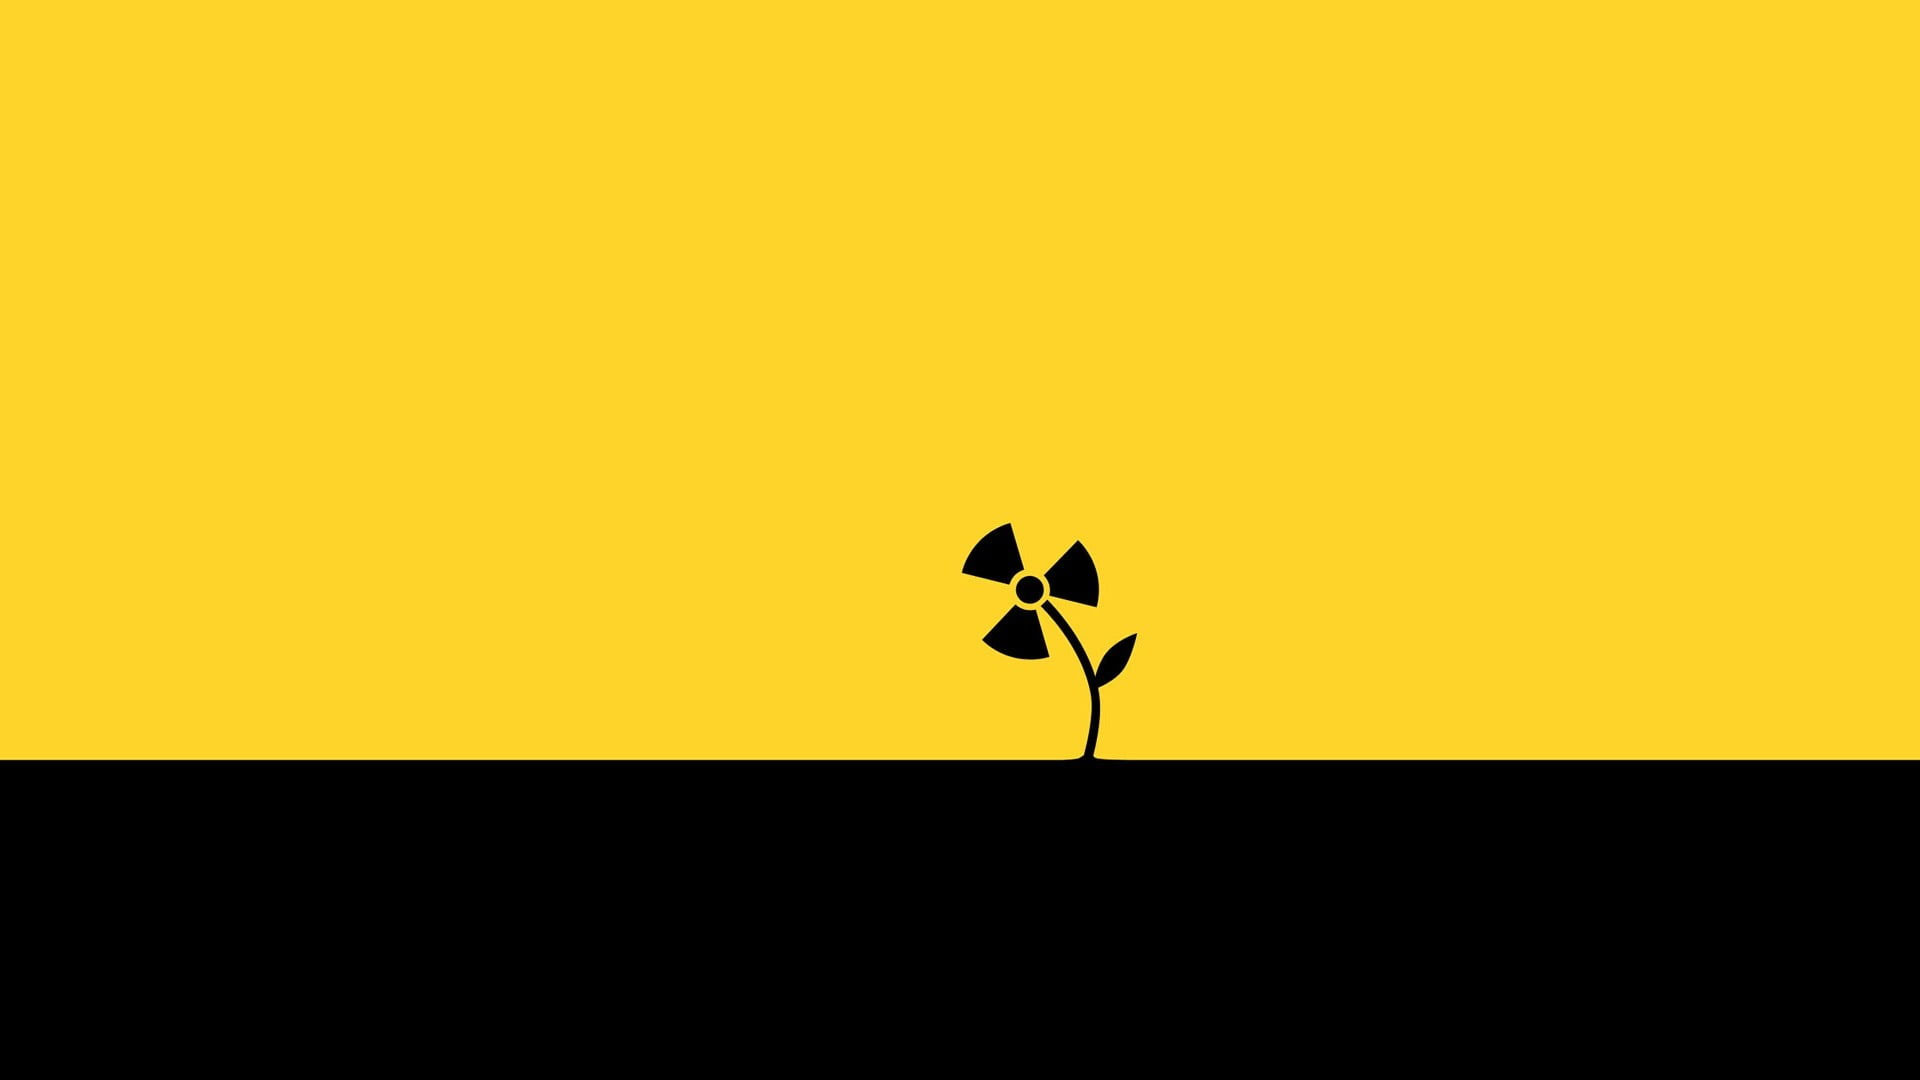 Black and yellow biohazard logo wallpaper, digital art, minimalism, simple